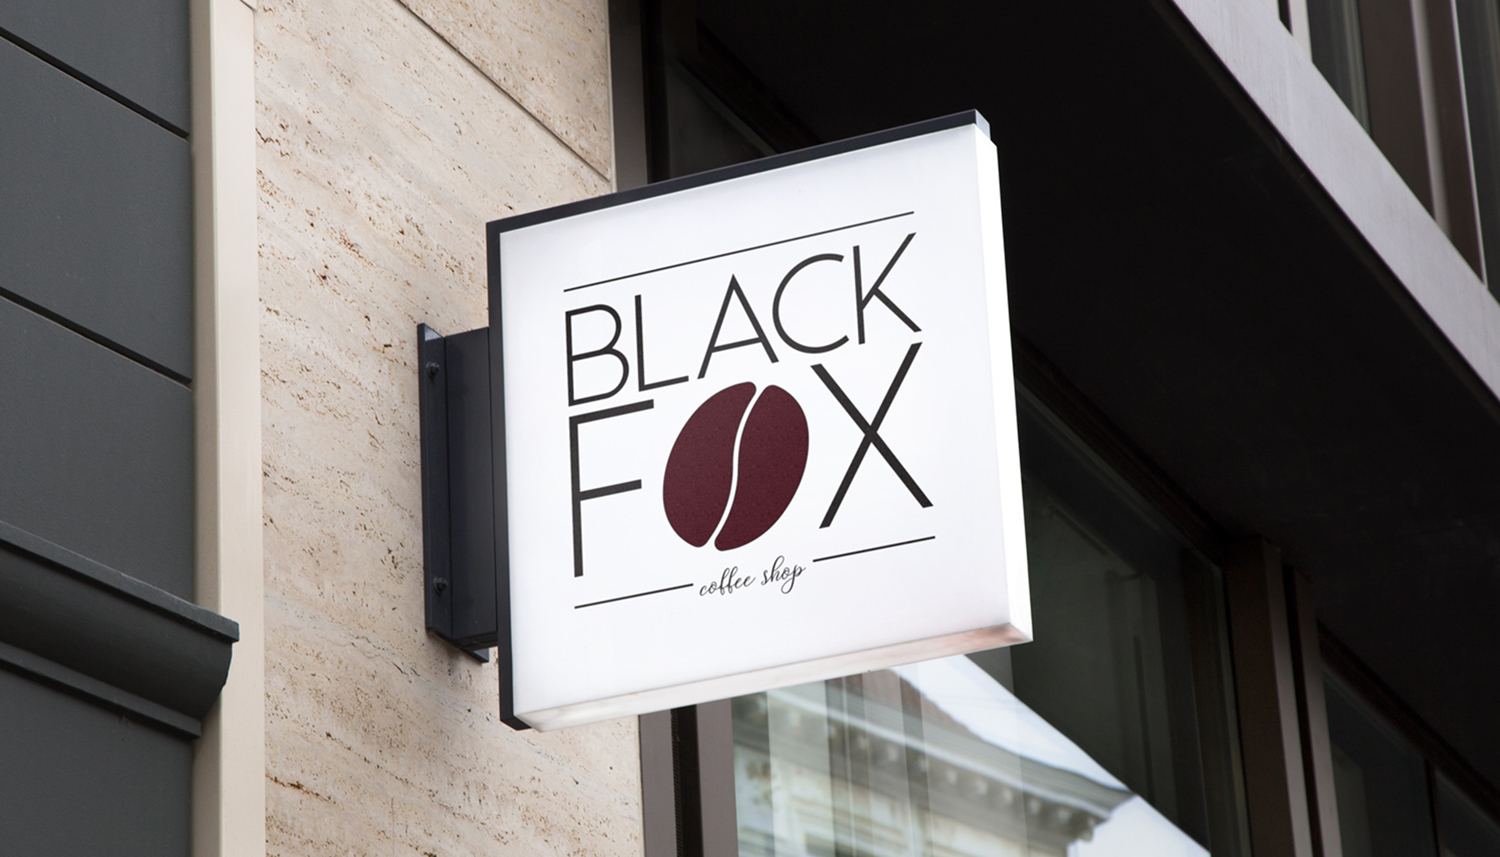 Black Fox Coffee Shop sign